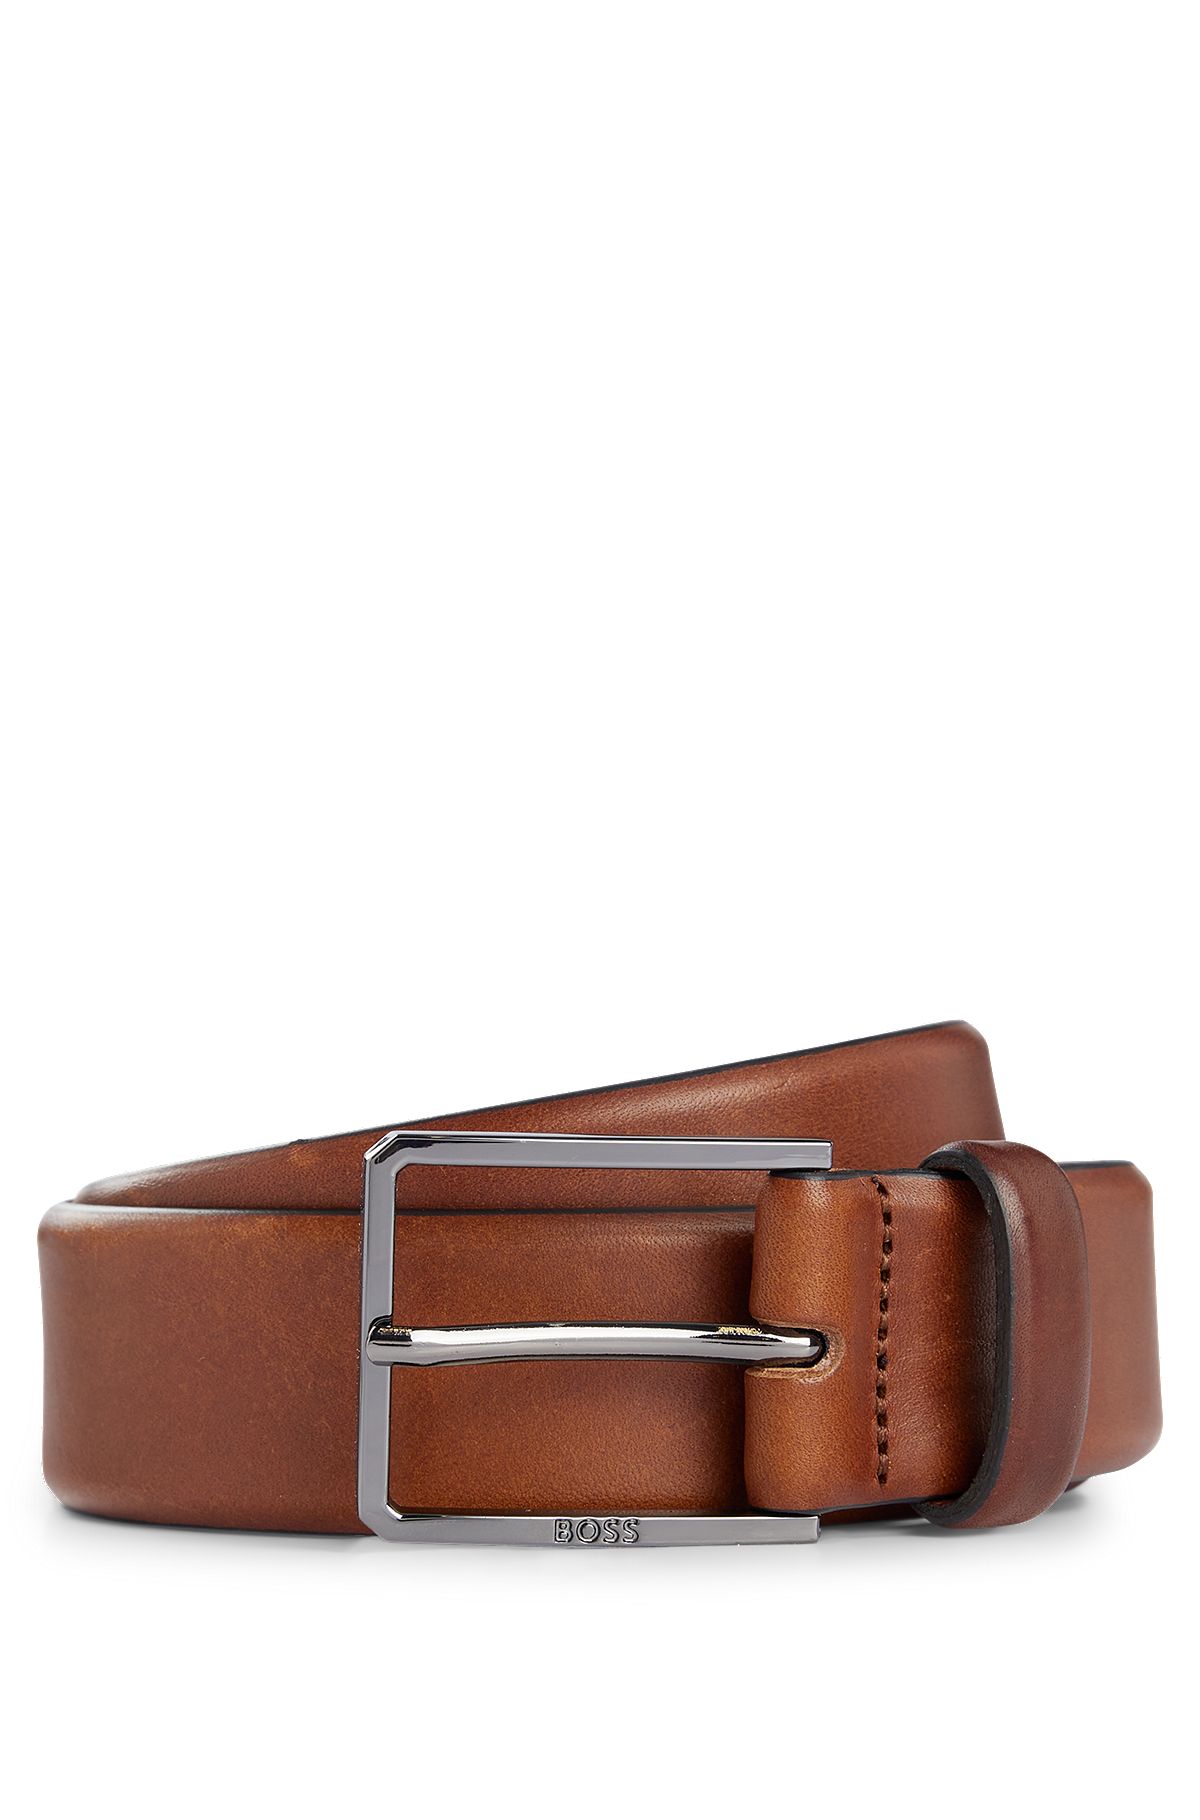 Italian-leather belt with polished gunmetal hardware, Brown